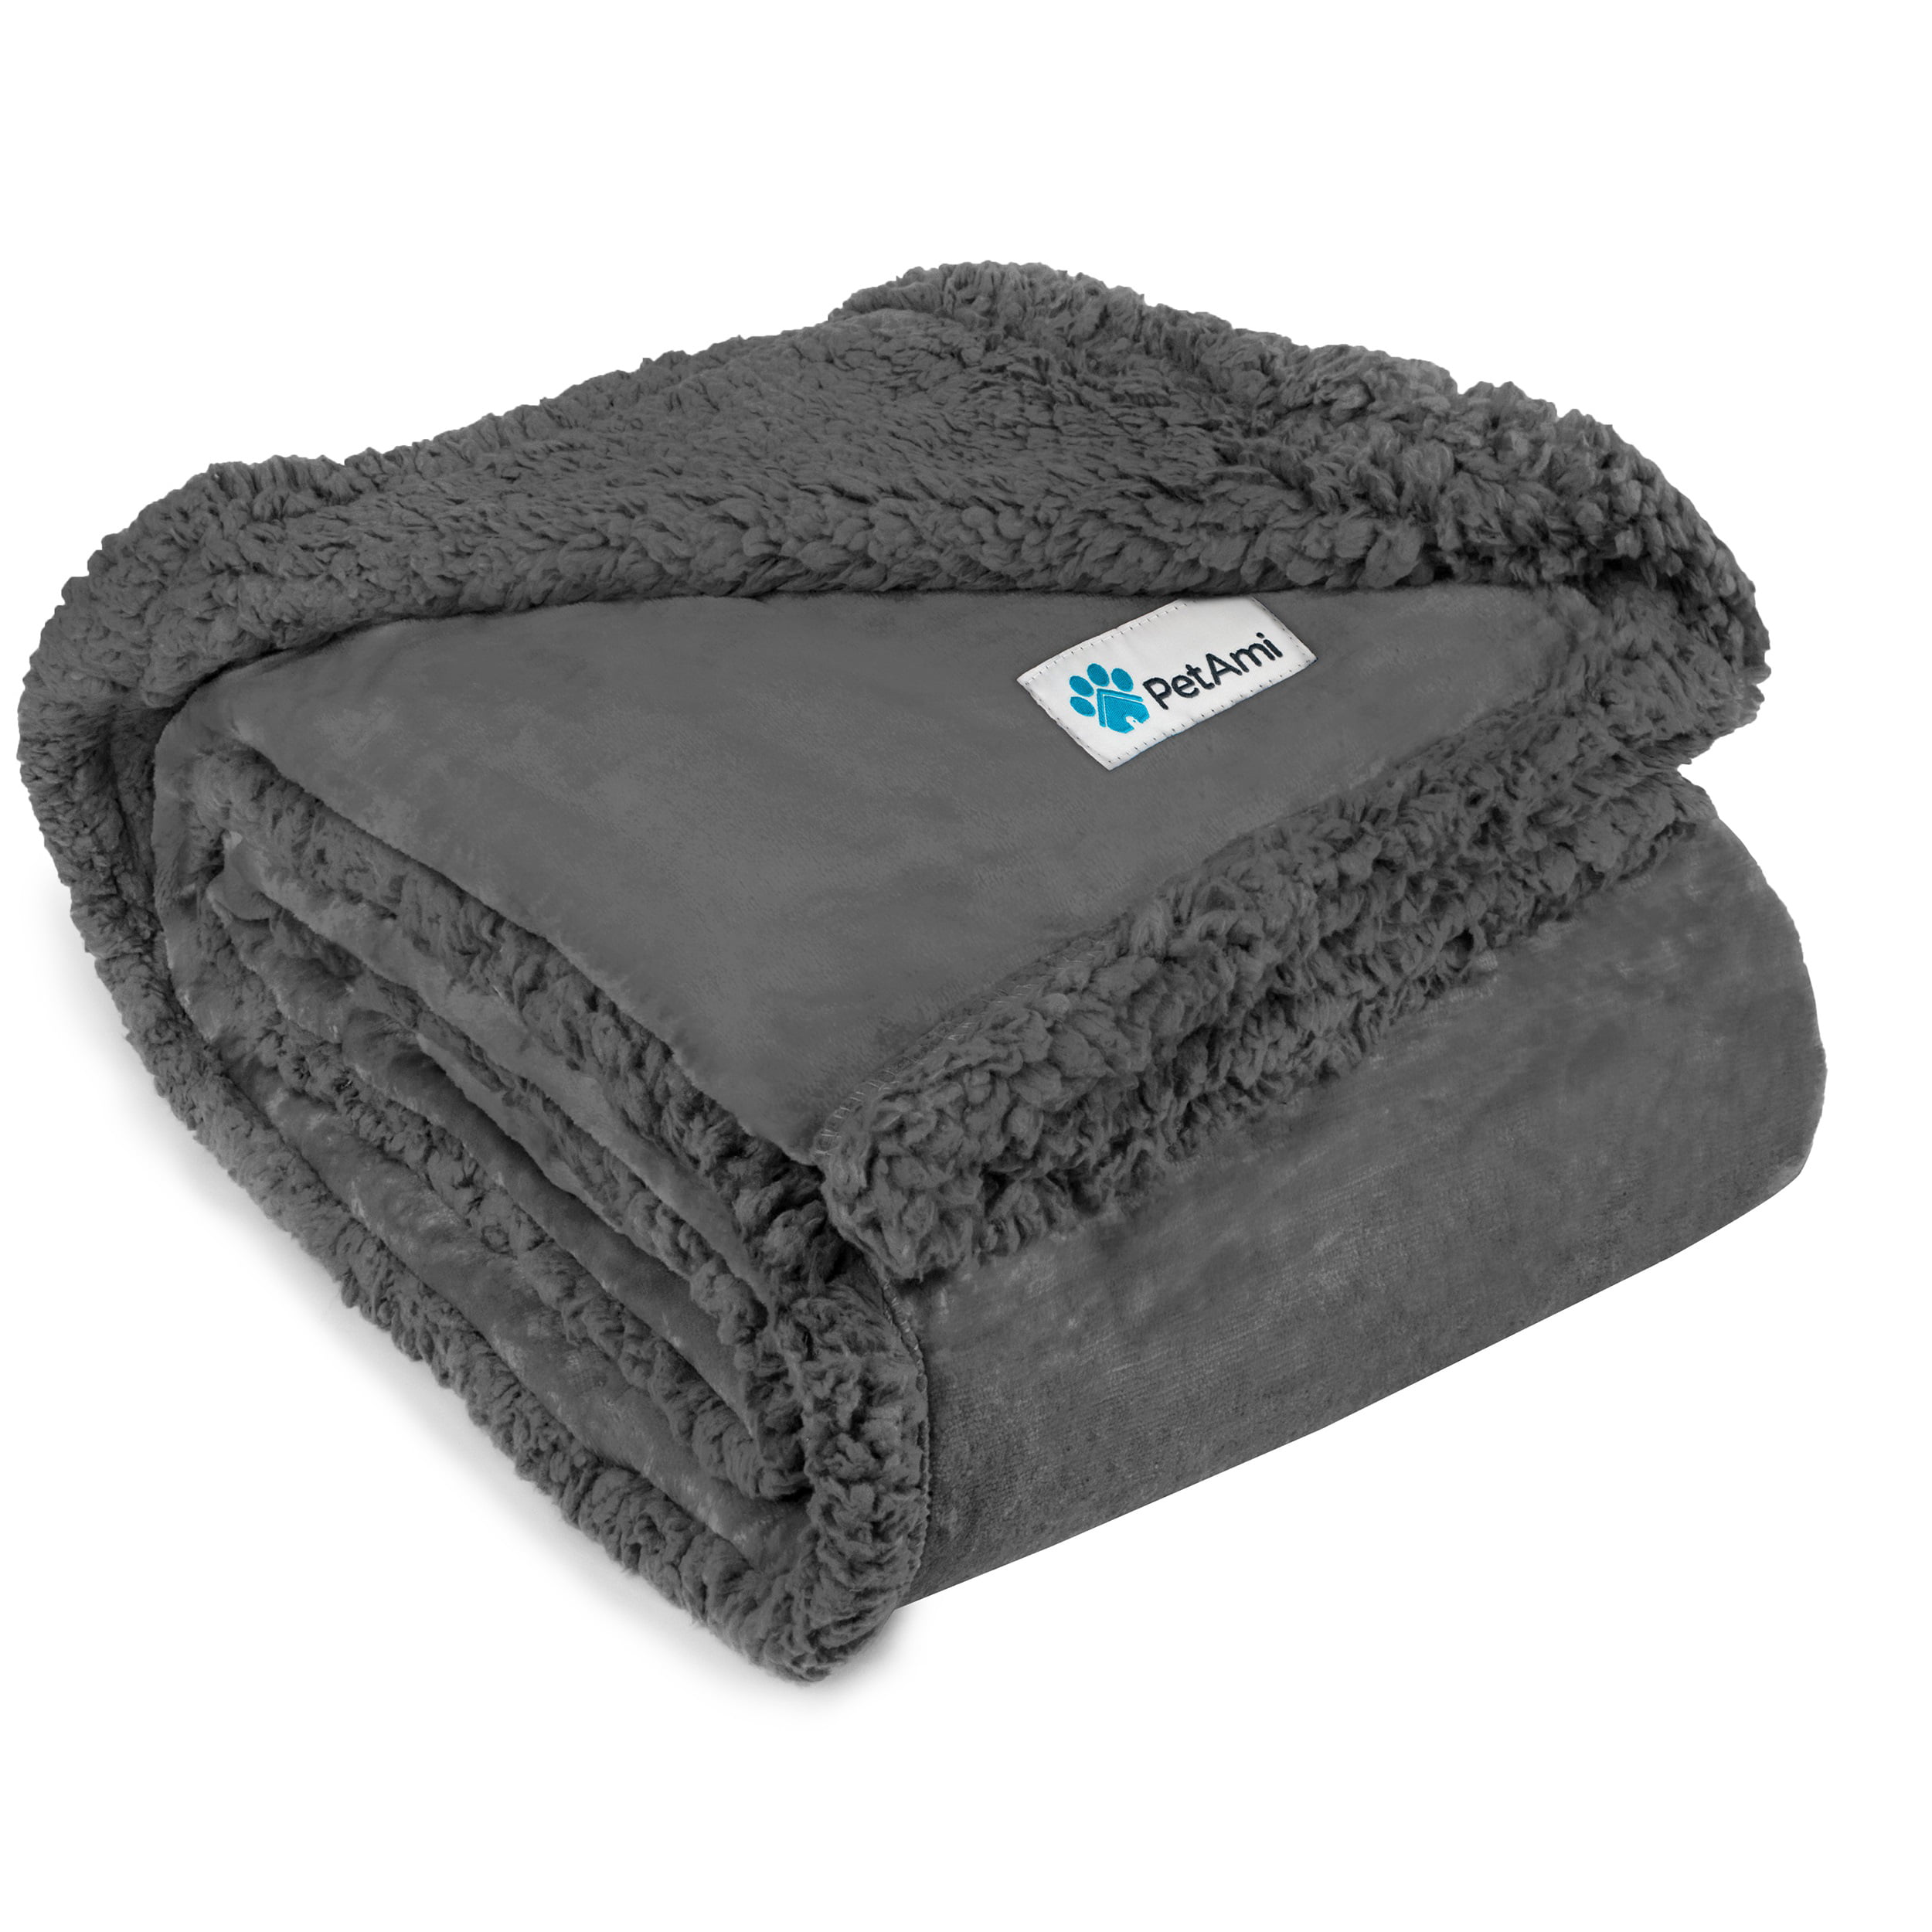 45"x31" British Bulldog Dog Bed Car Blanket Soft Fleece Throw Cover Pet Animal 